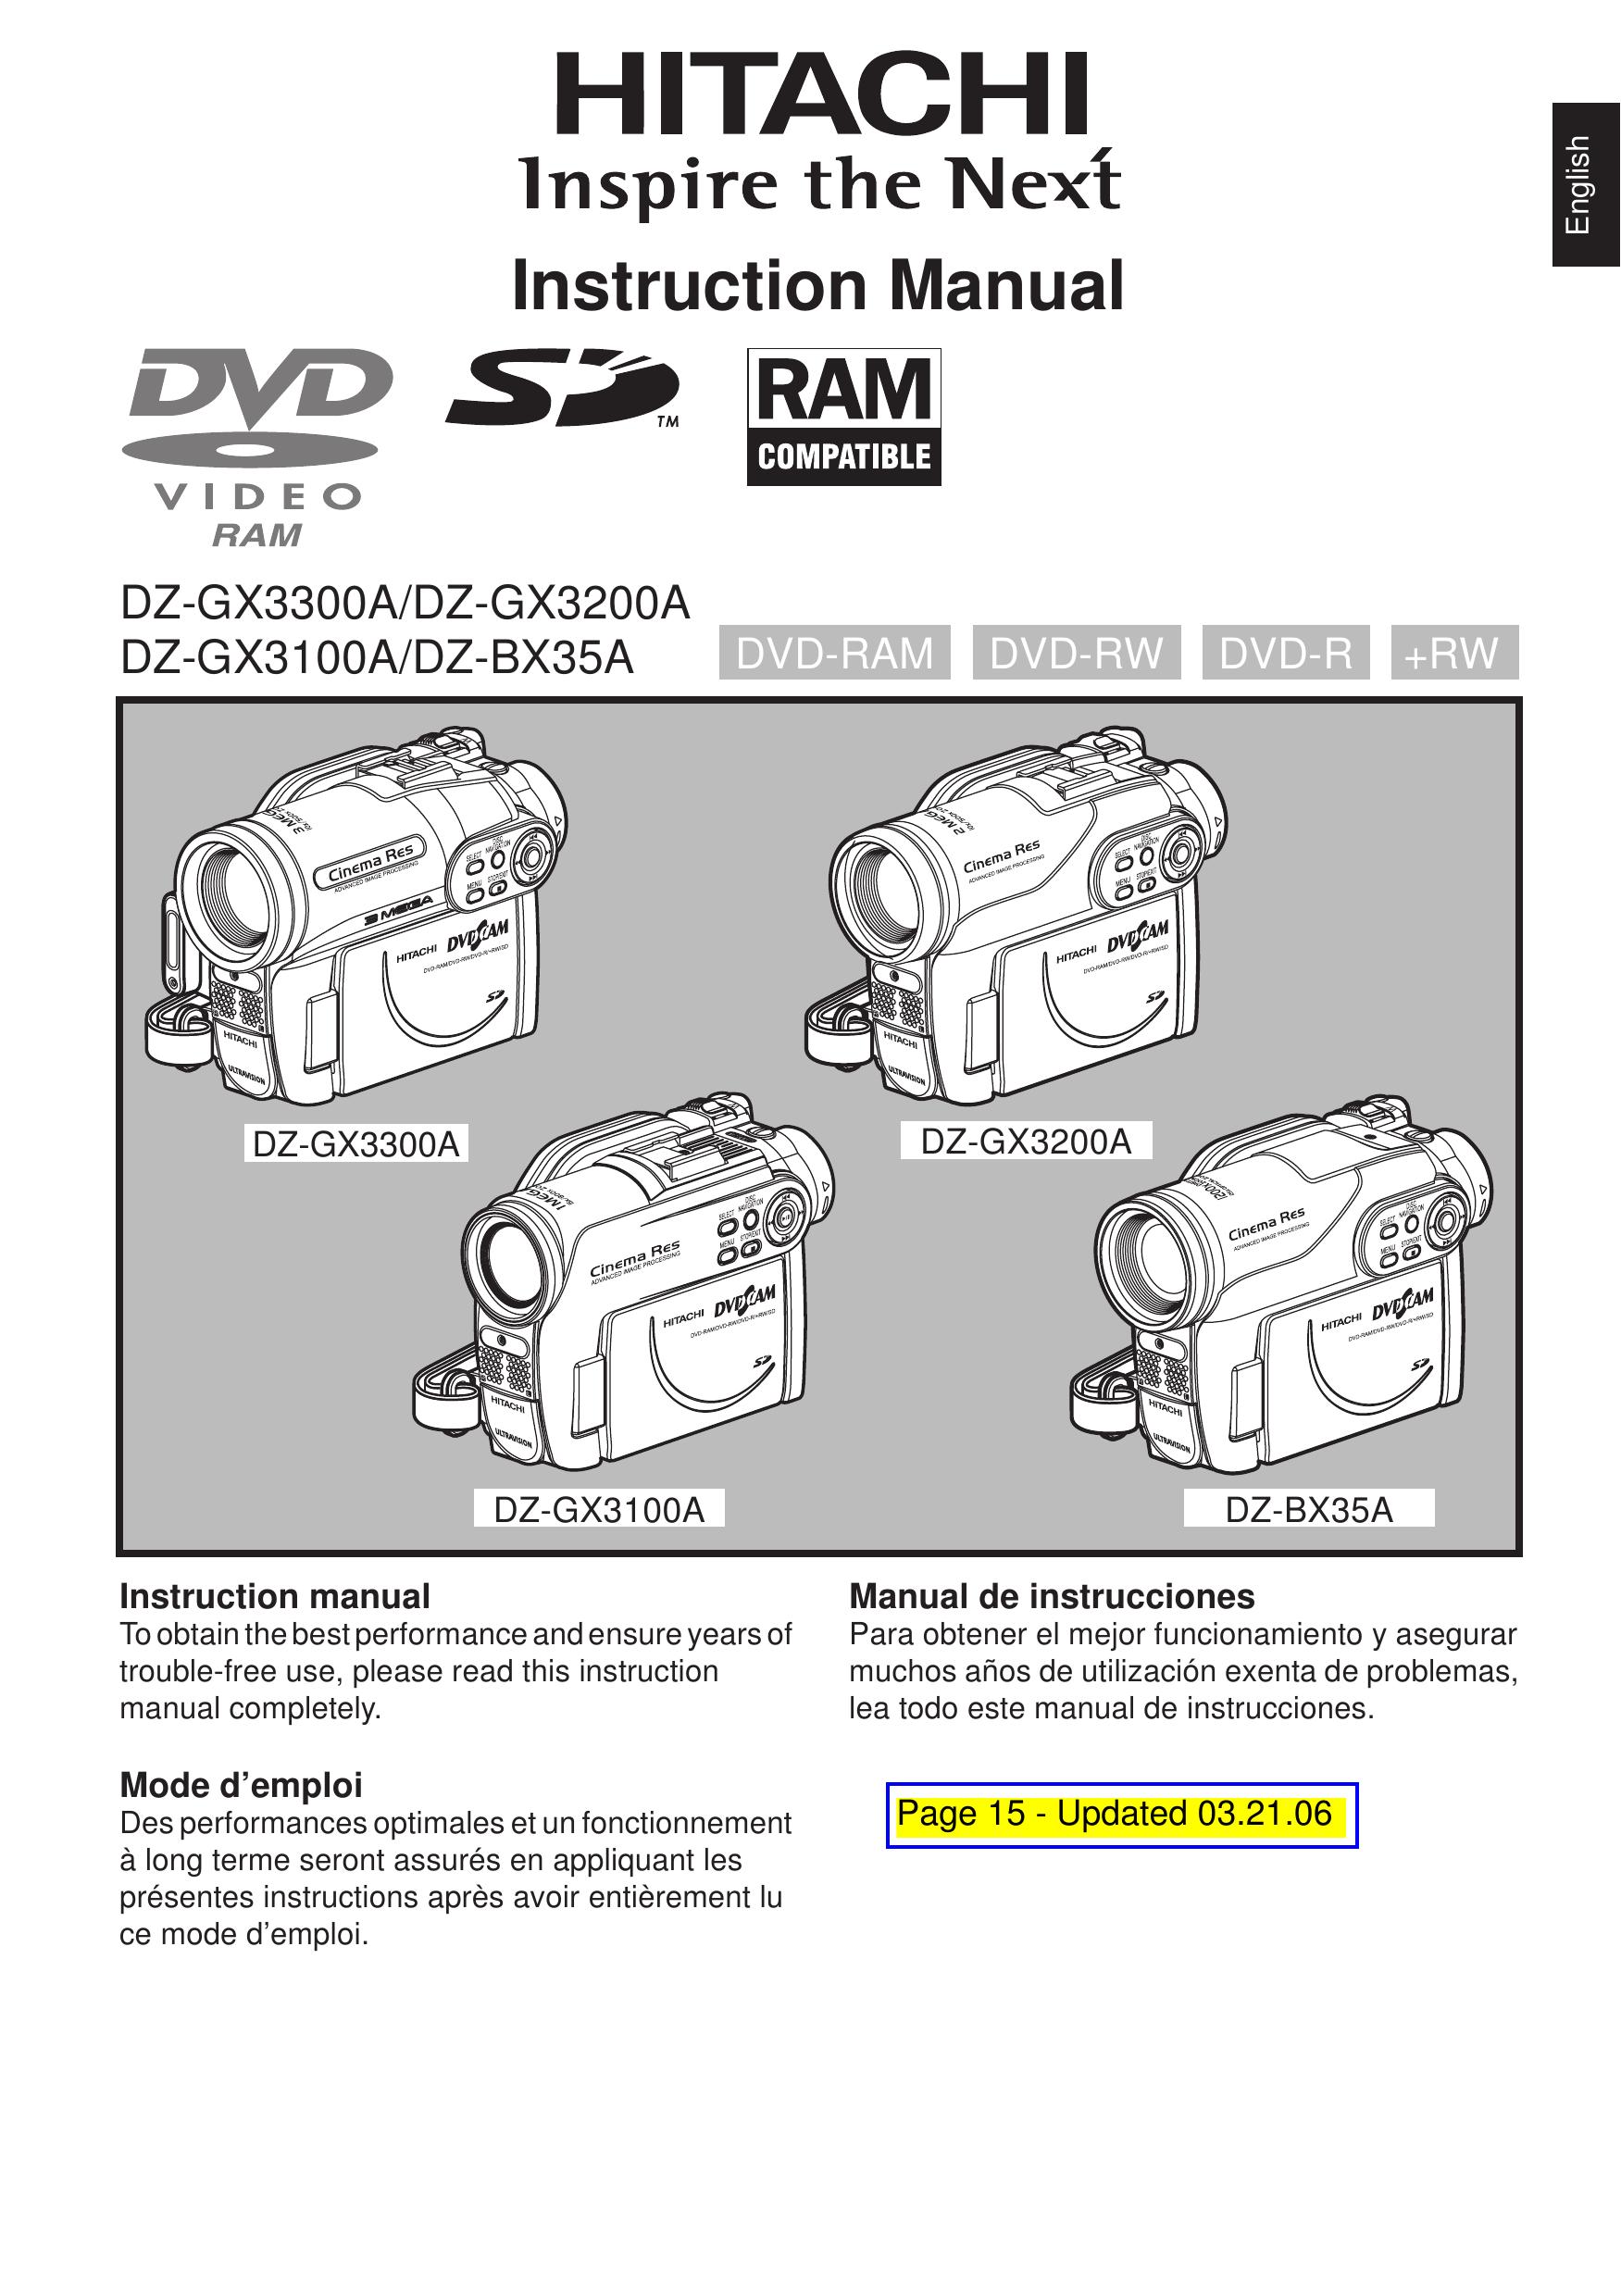 Hitachi DZ-GX3200A Camcorder User Manual